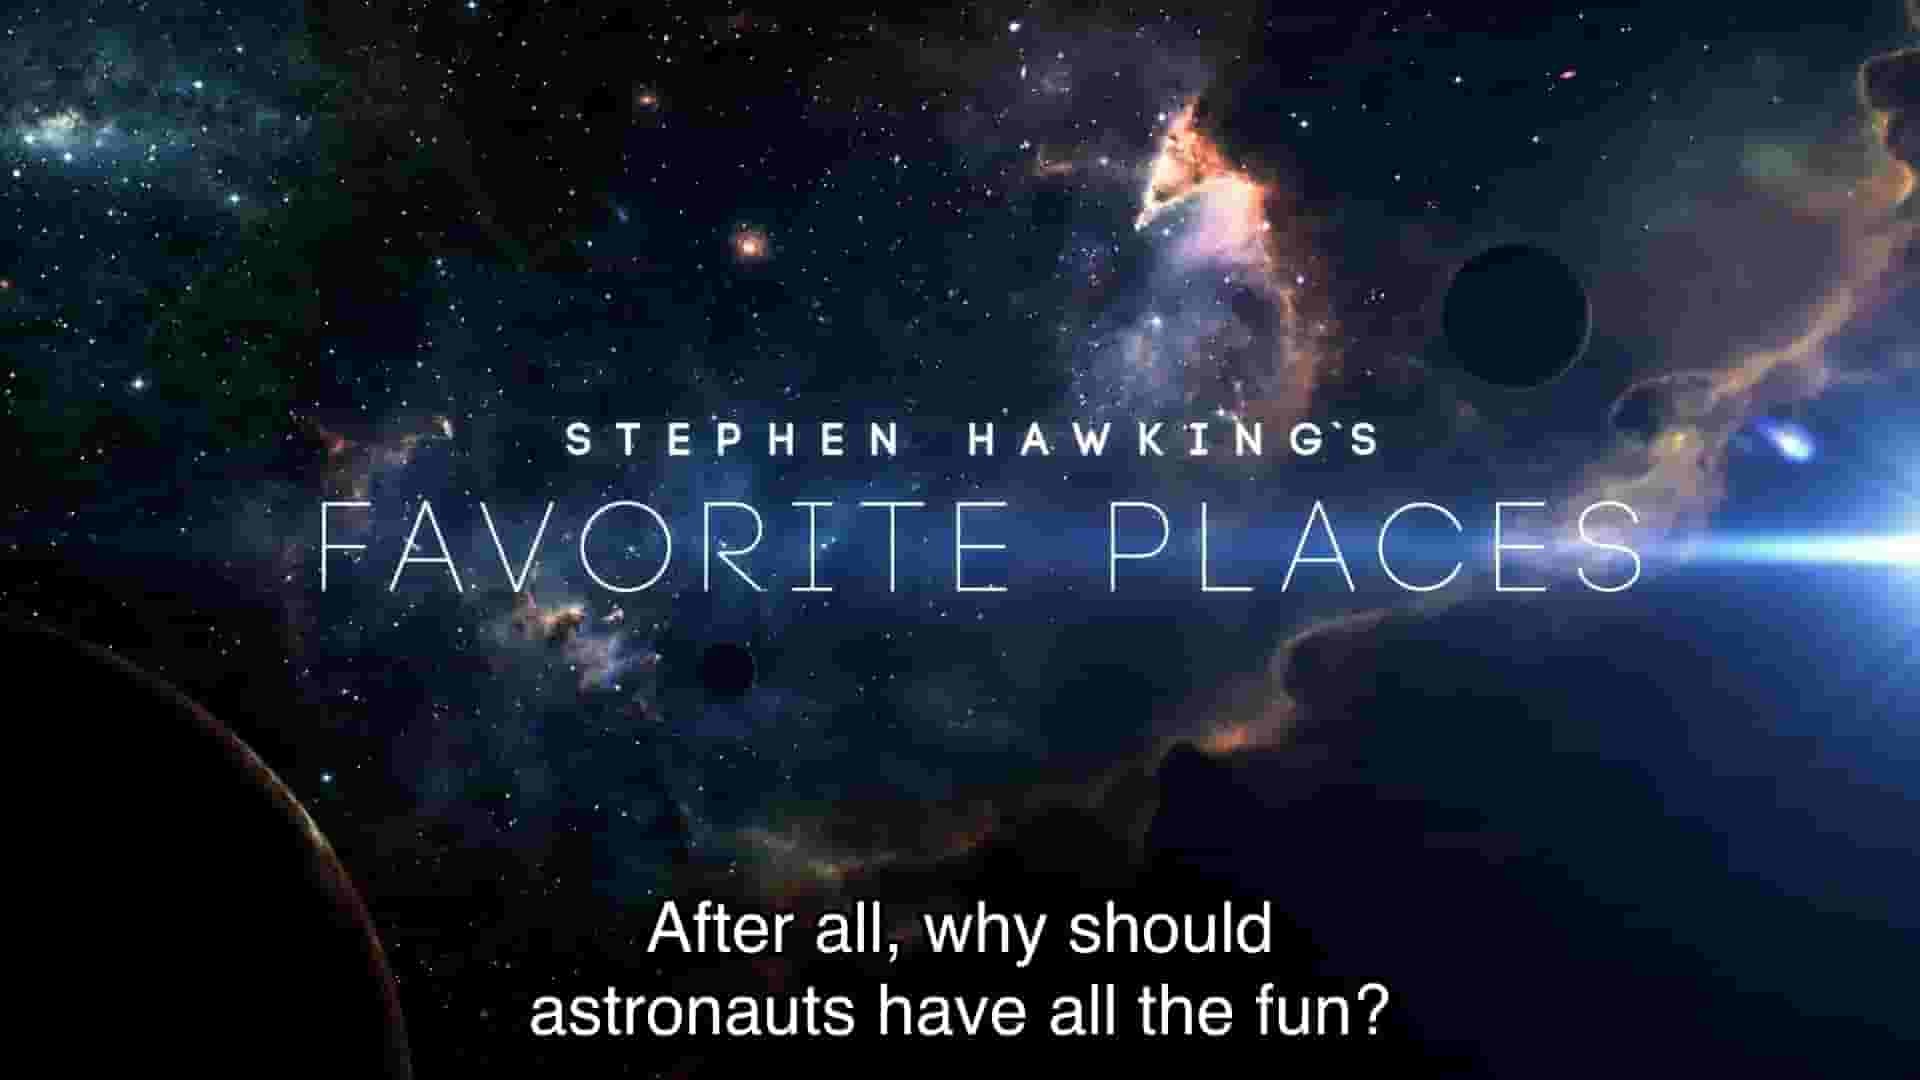 Curiosity Stream纪录片《霍金喜爱的地方 Stephen Hawking